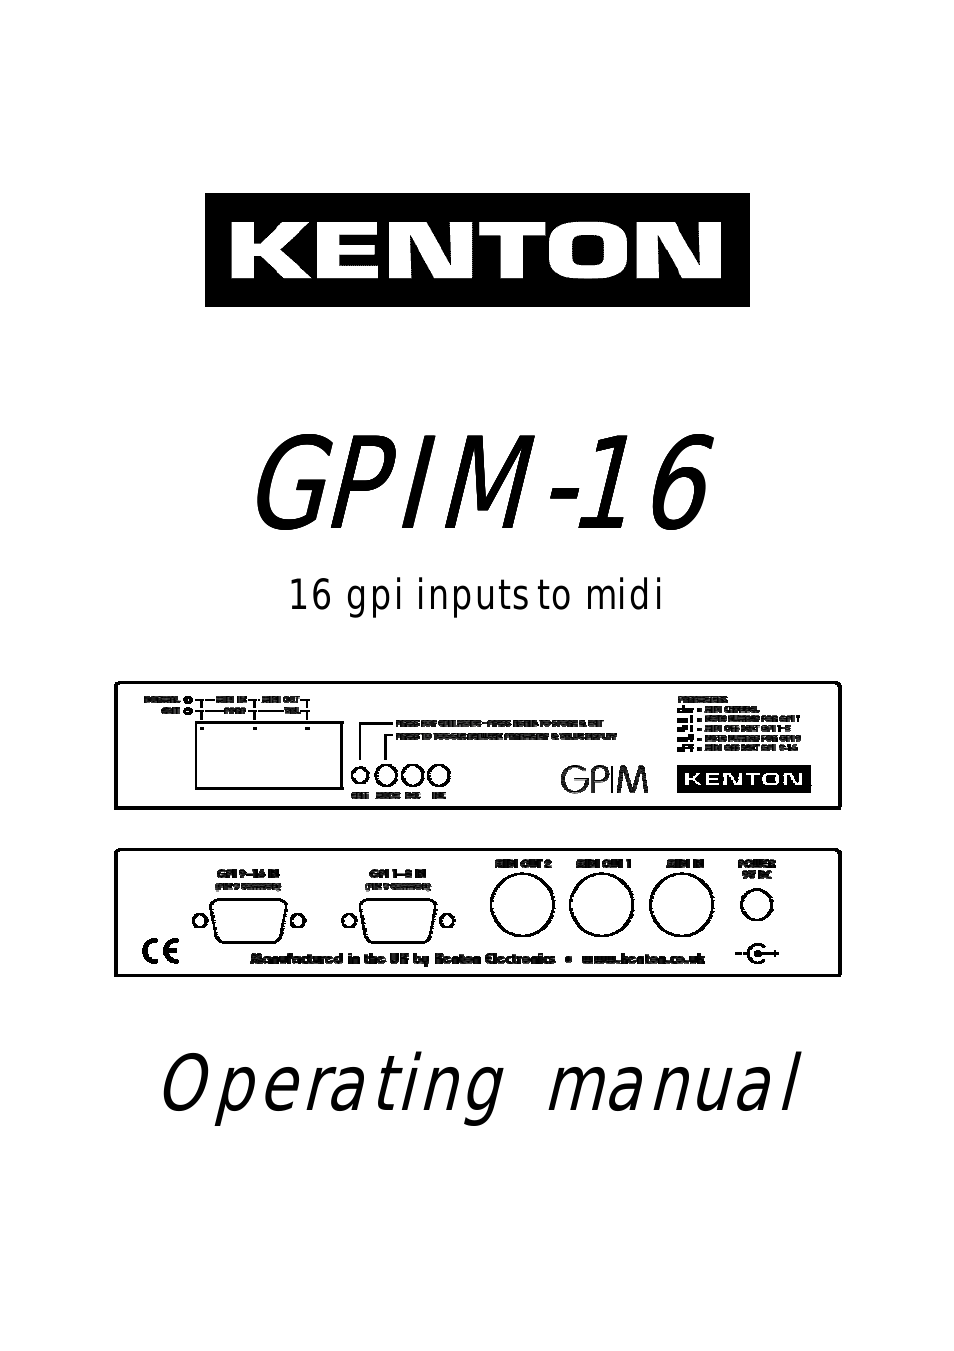 GPIM-16